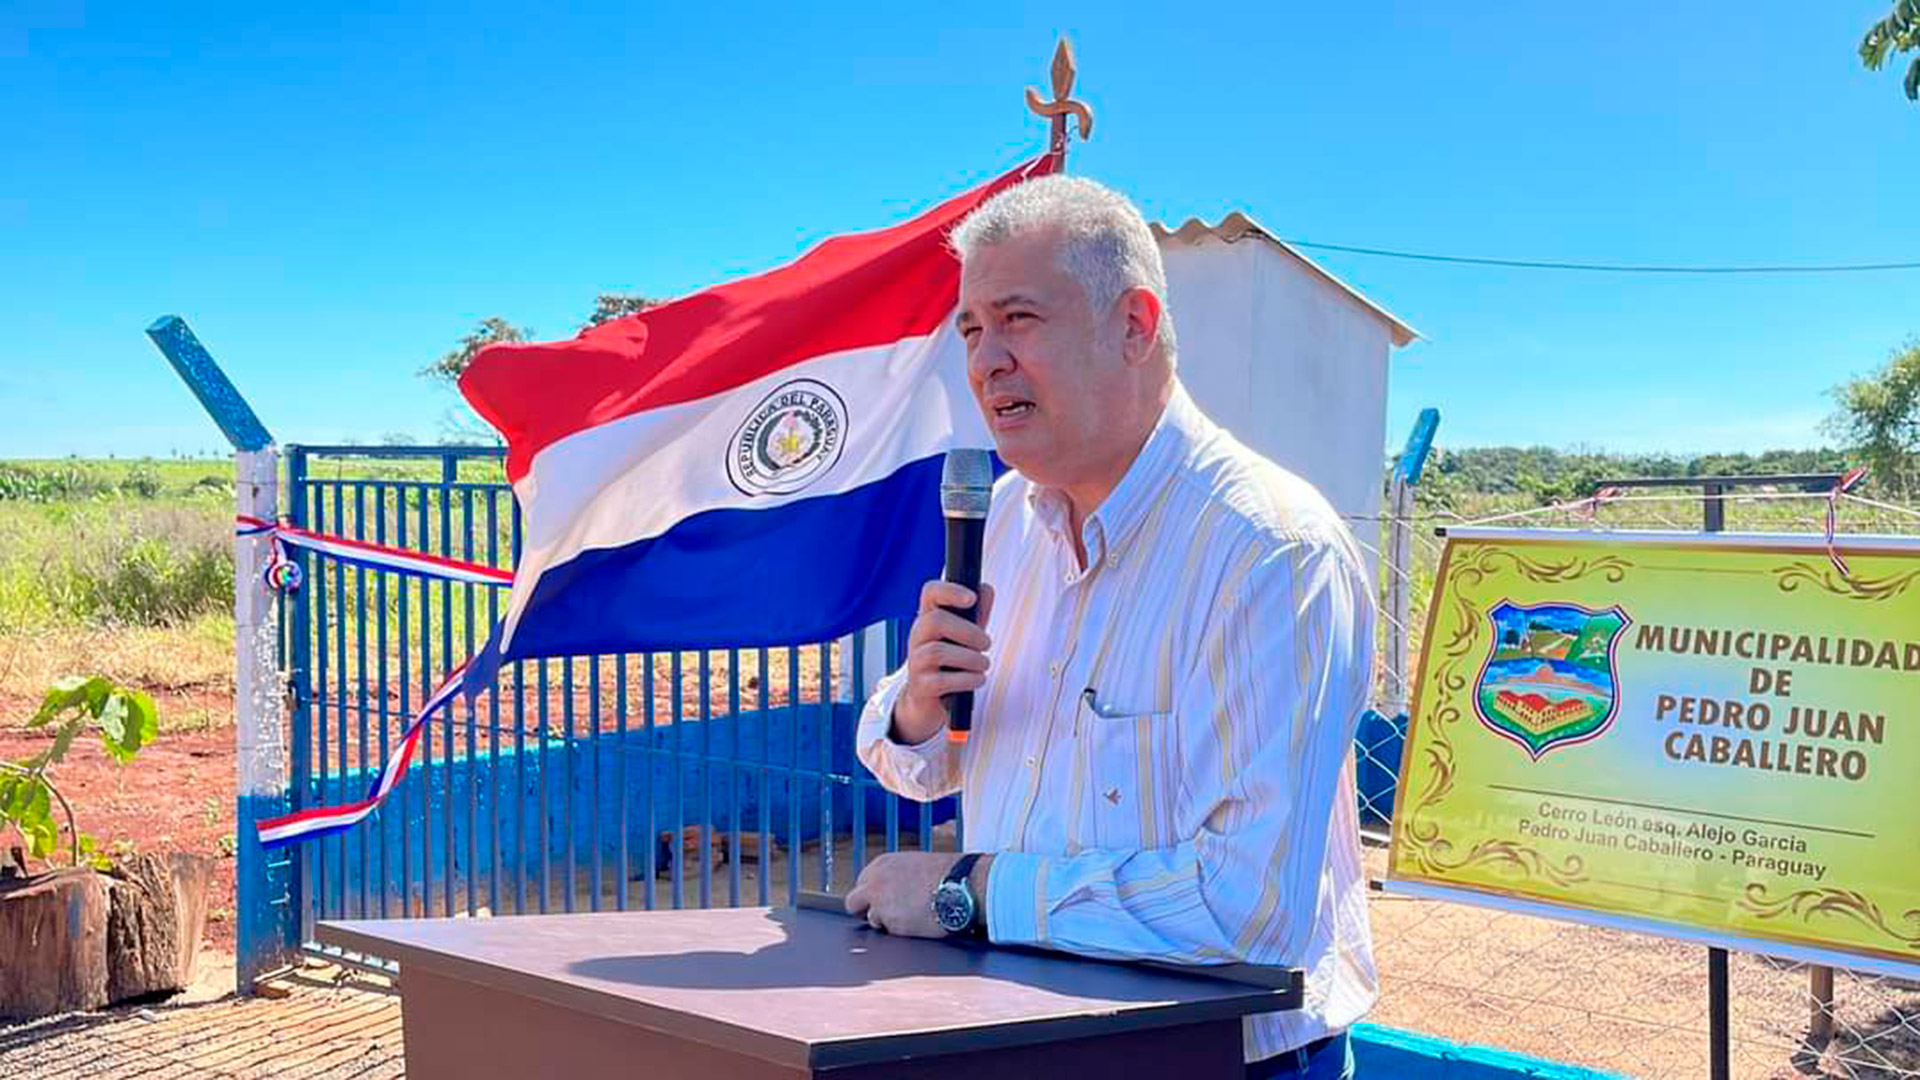 Mayor Jose Carlos Acevedo